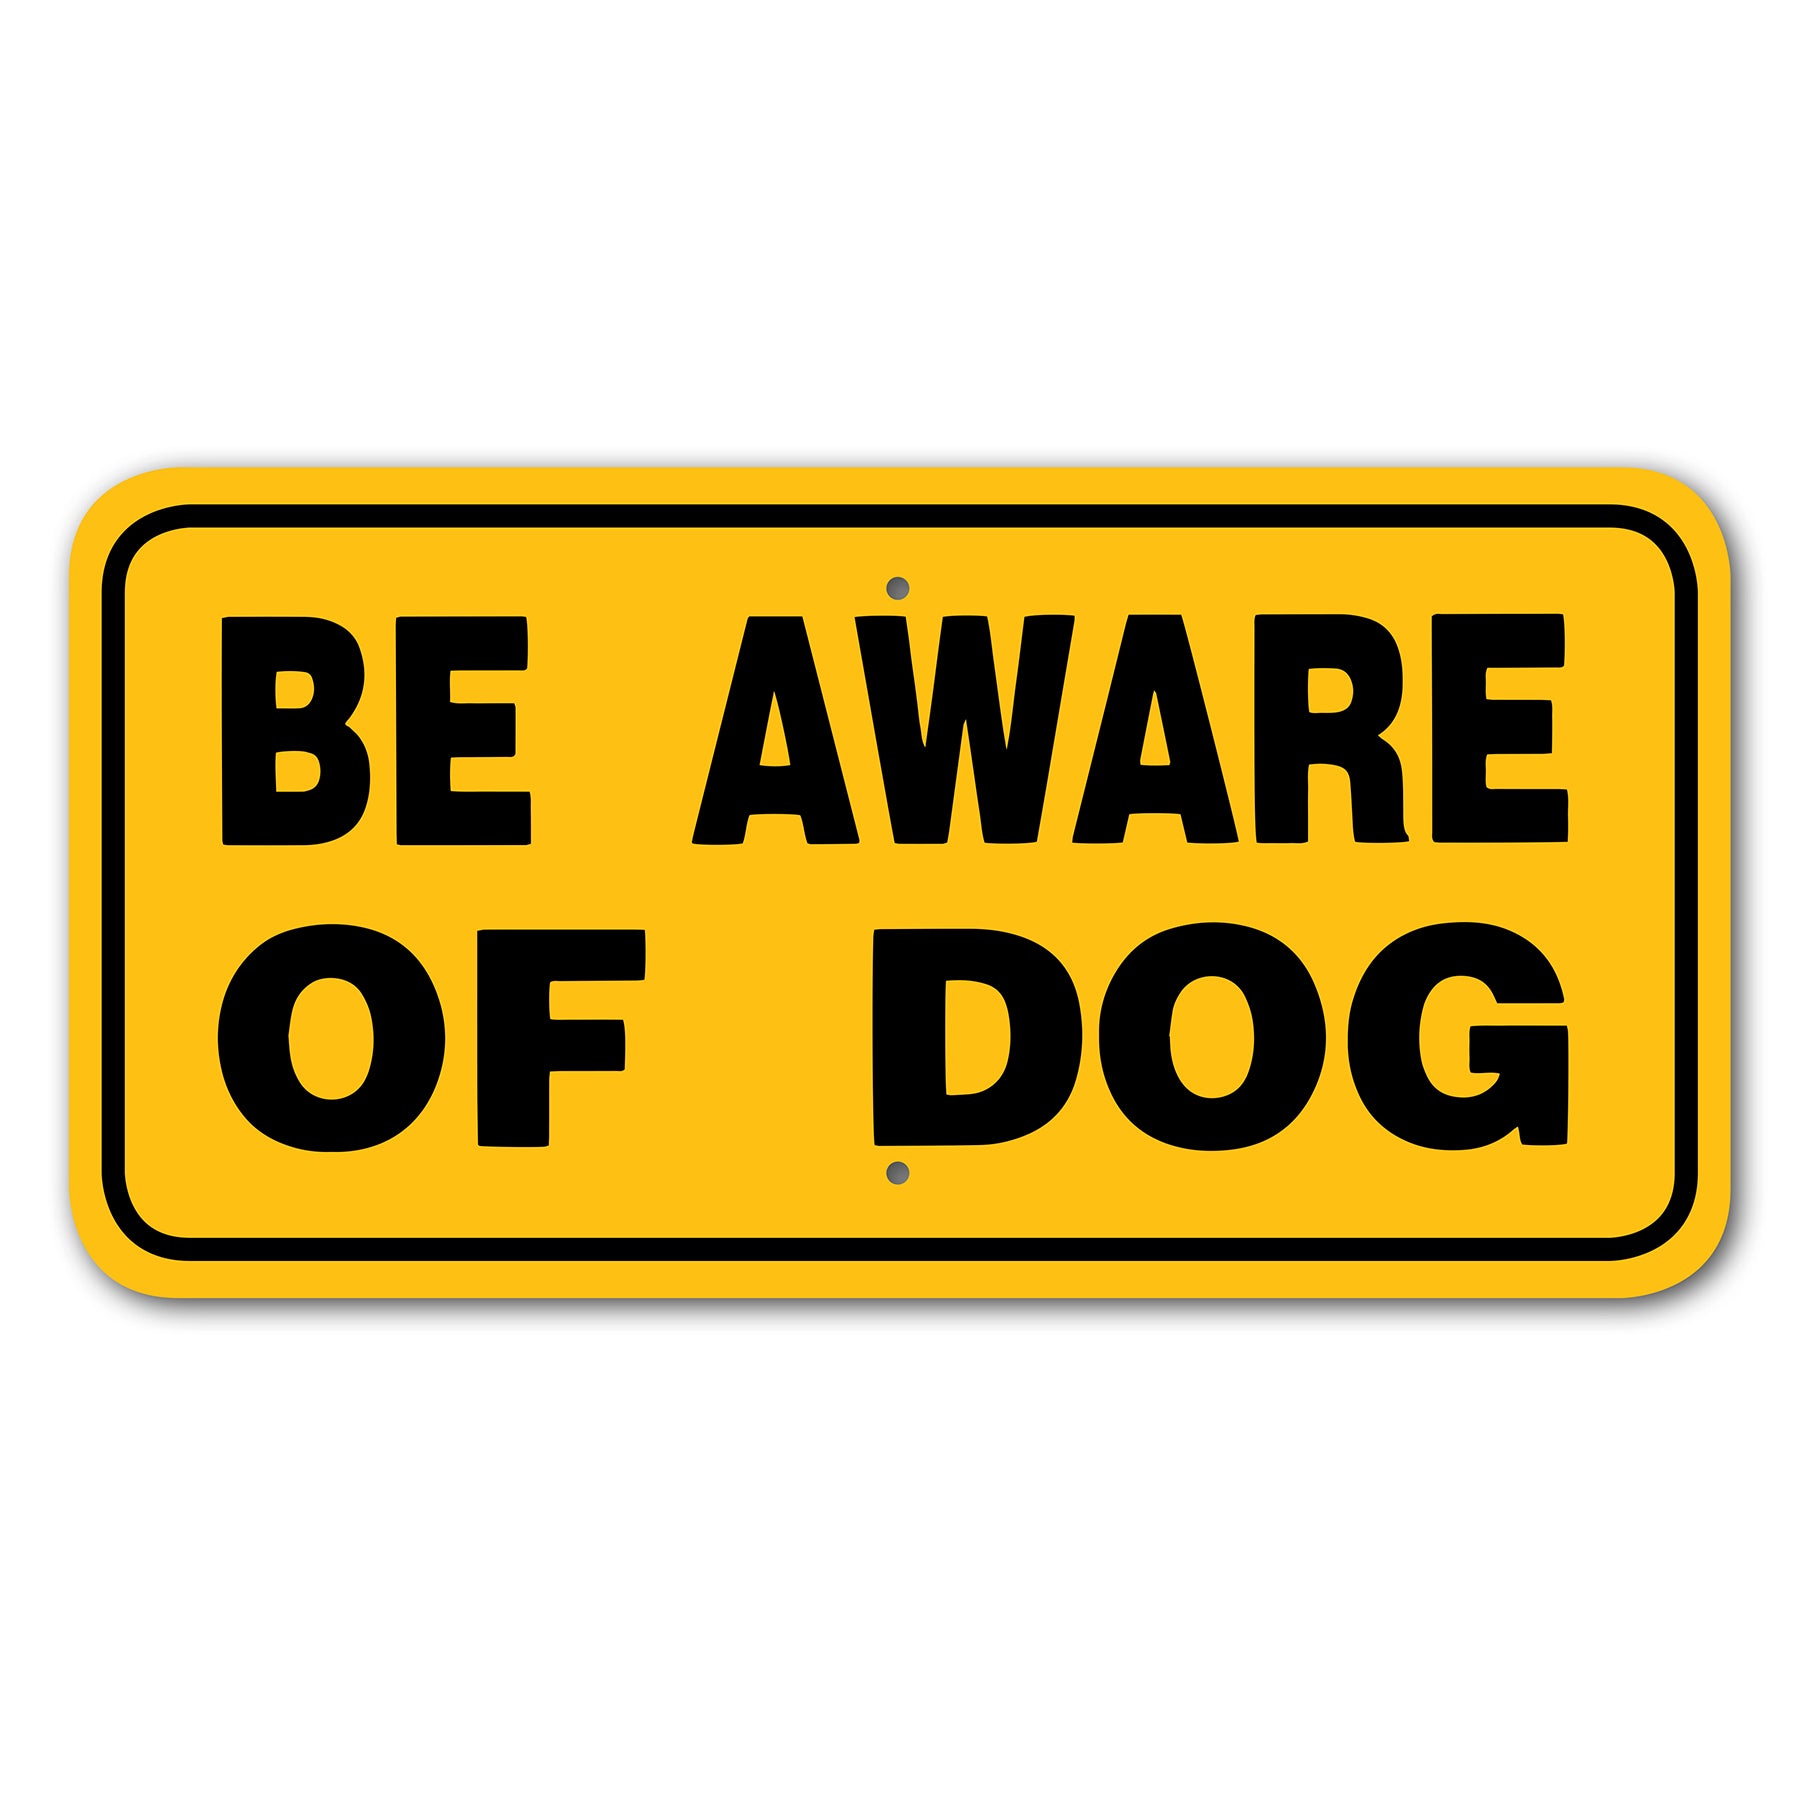 be aware of dog 3444444 main